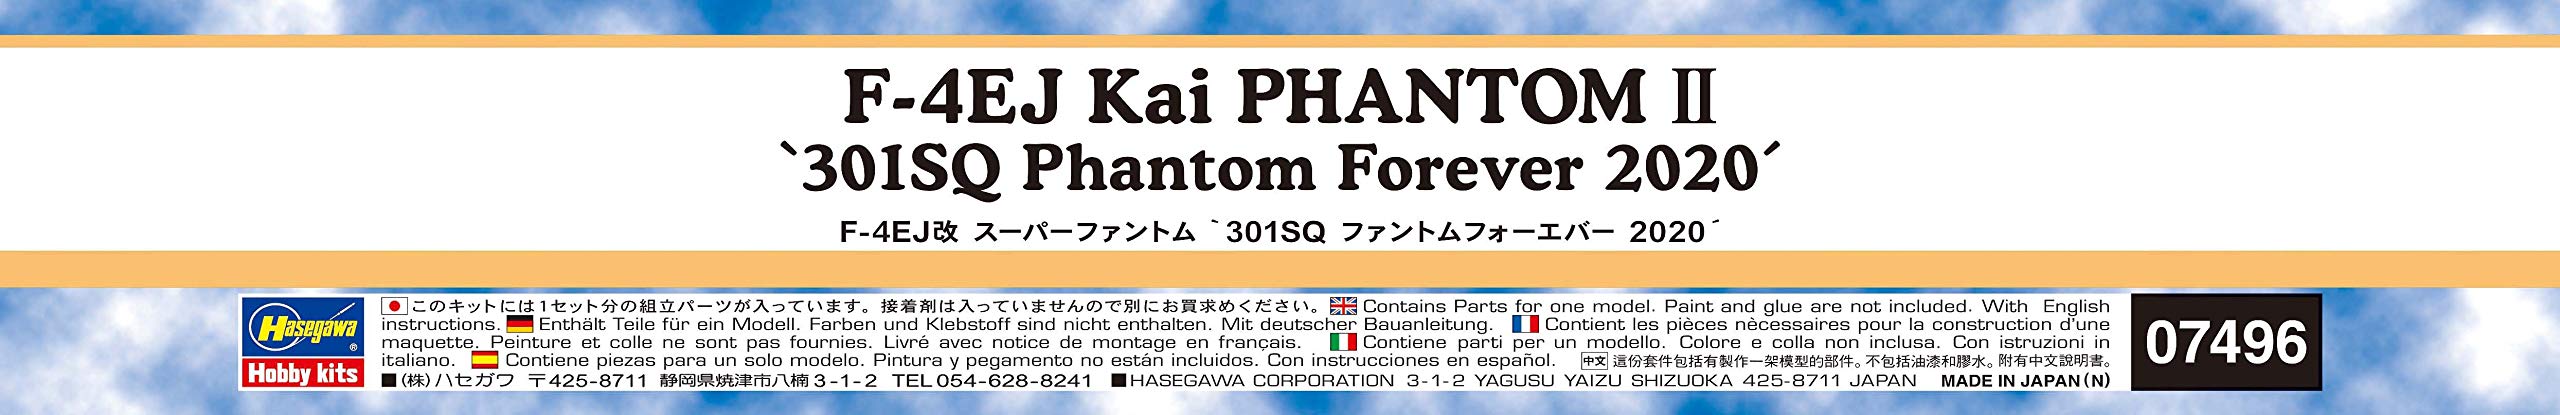 HASEGAWA 74965 F-4Ej Kai Super Phantom 301Sq Phantom Forever 2020 1/48 Kunststoffmodell